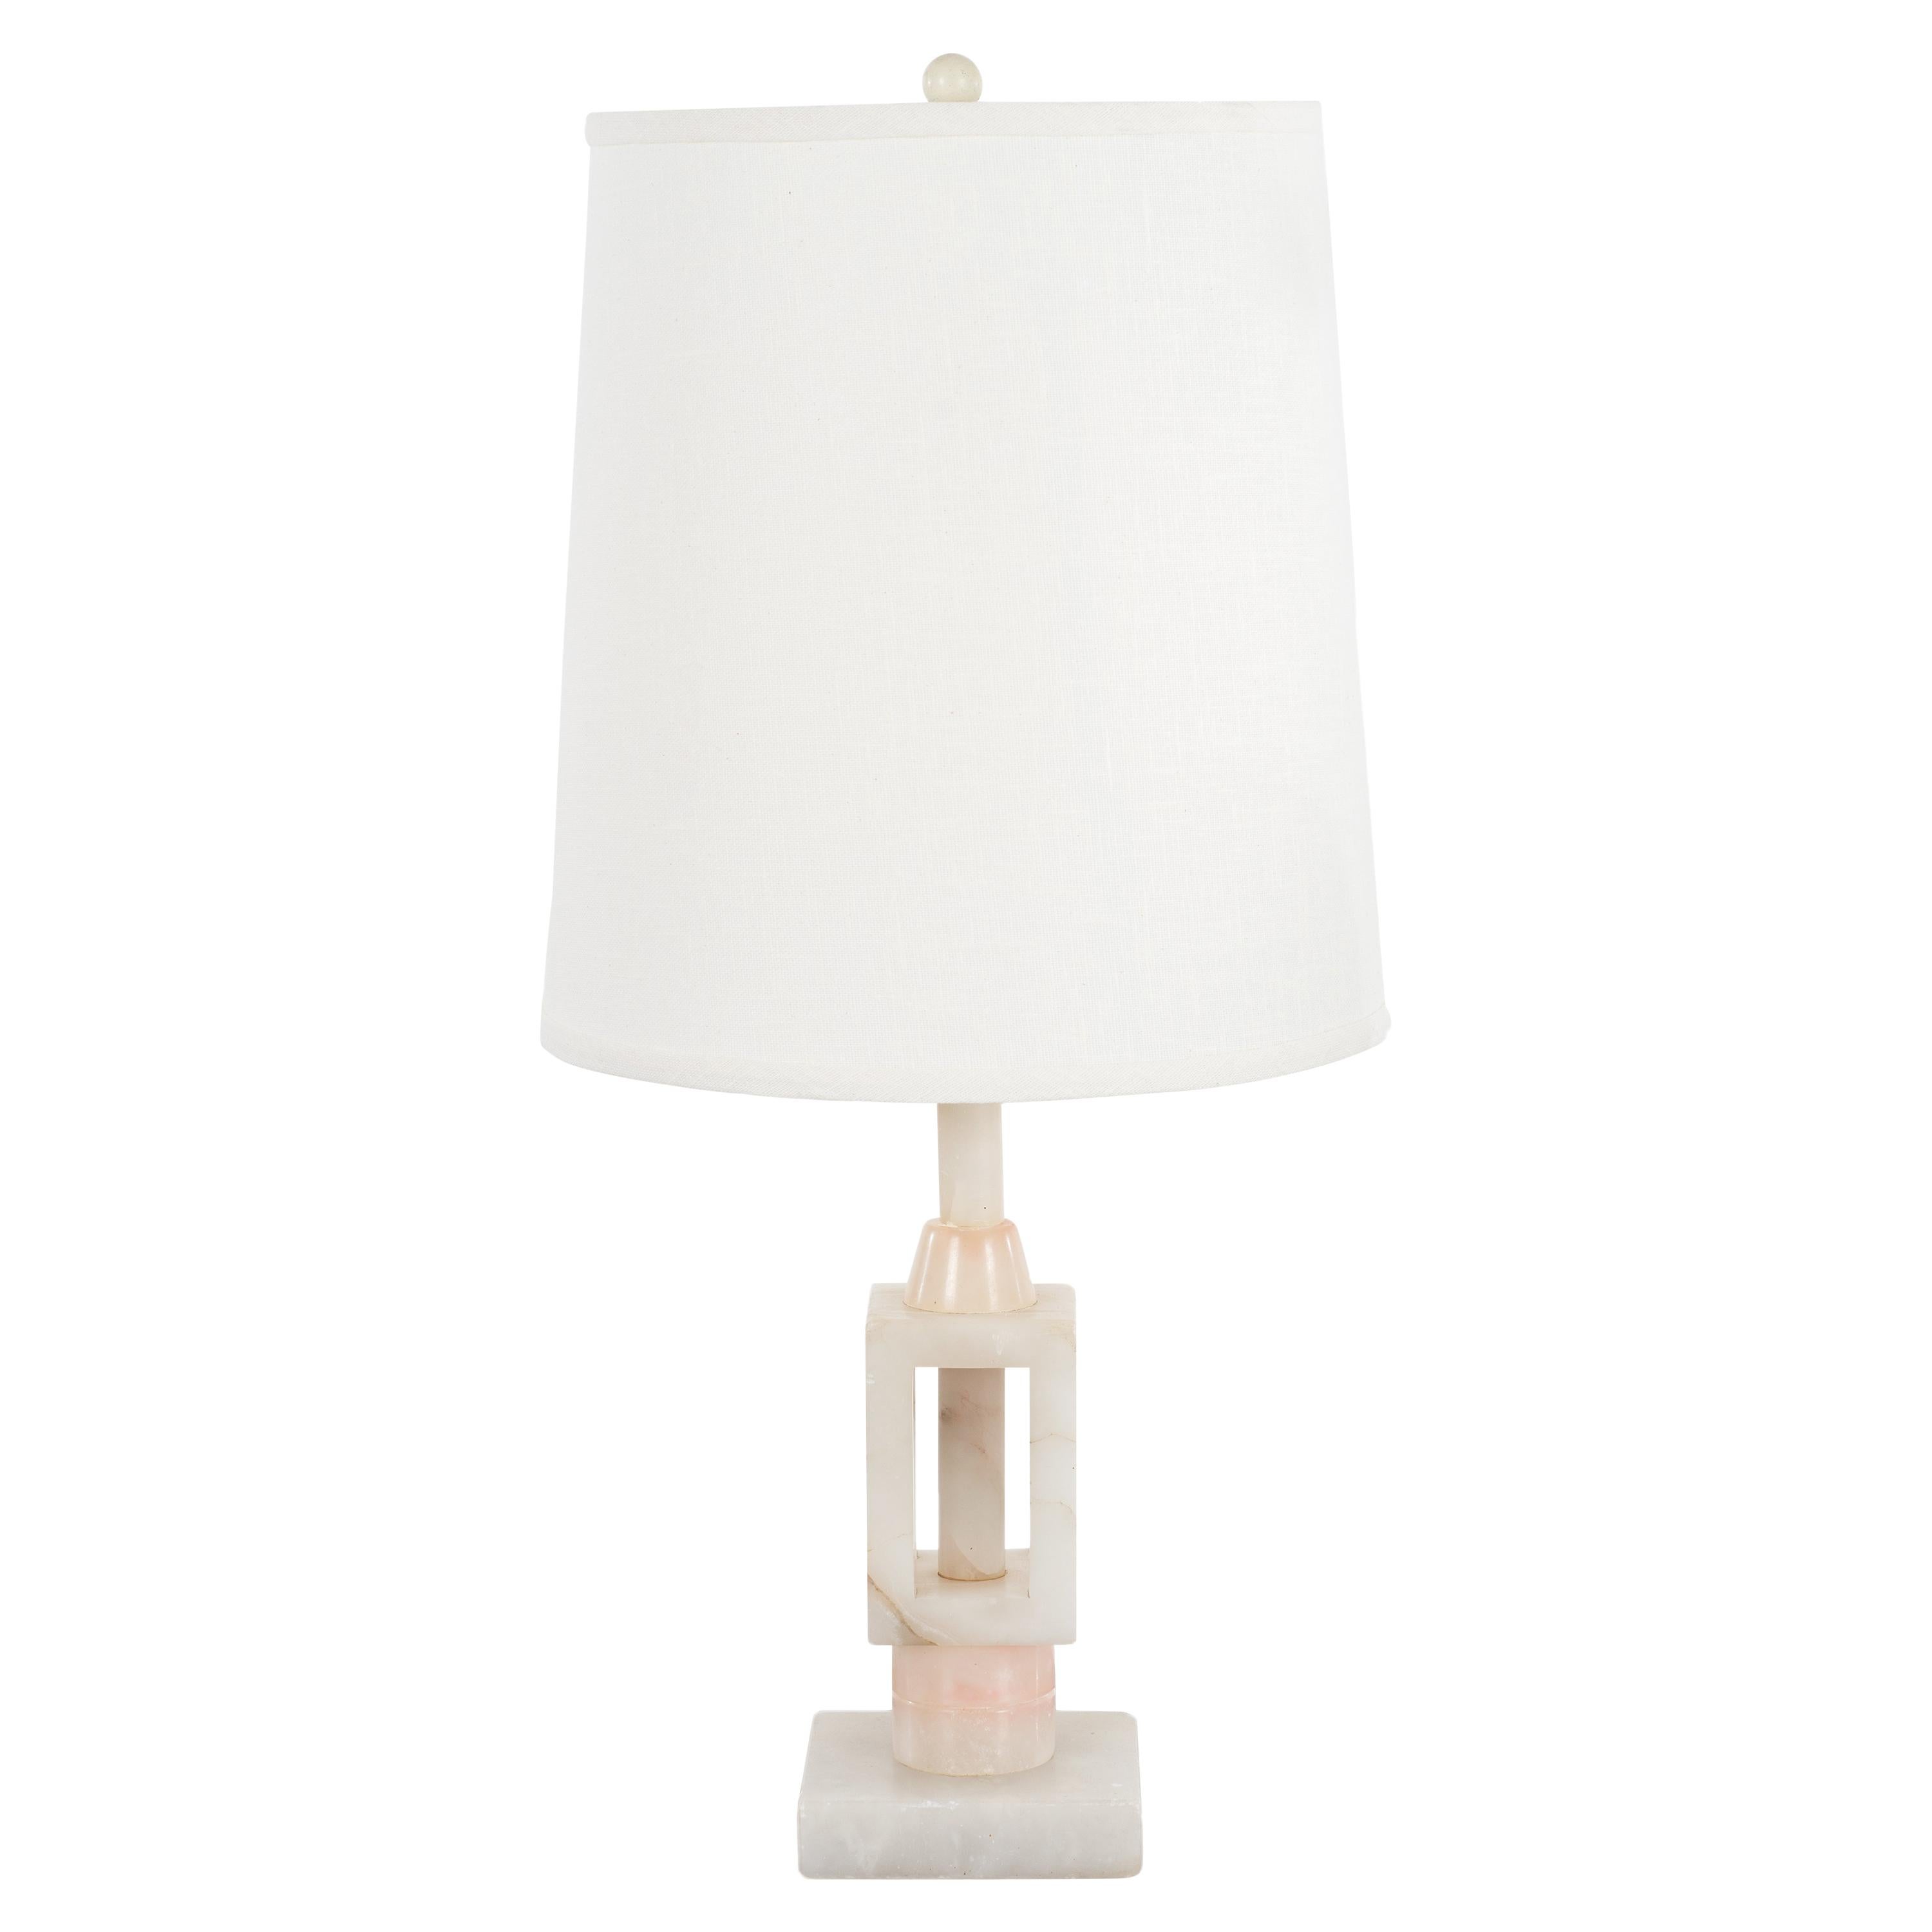 Arturo Pani Style Onyx Marble Table Lamp